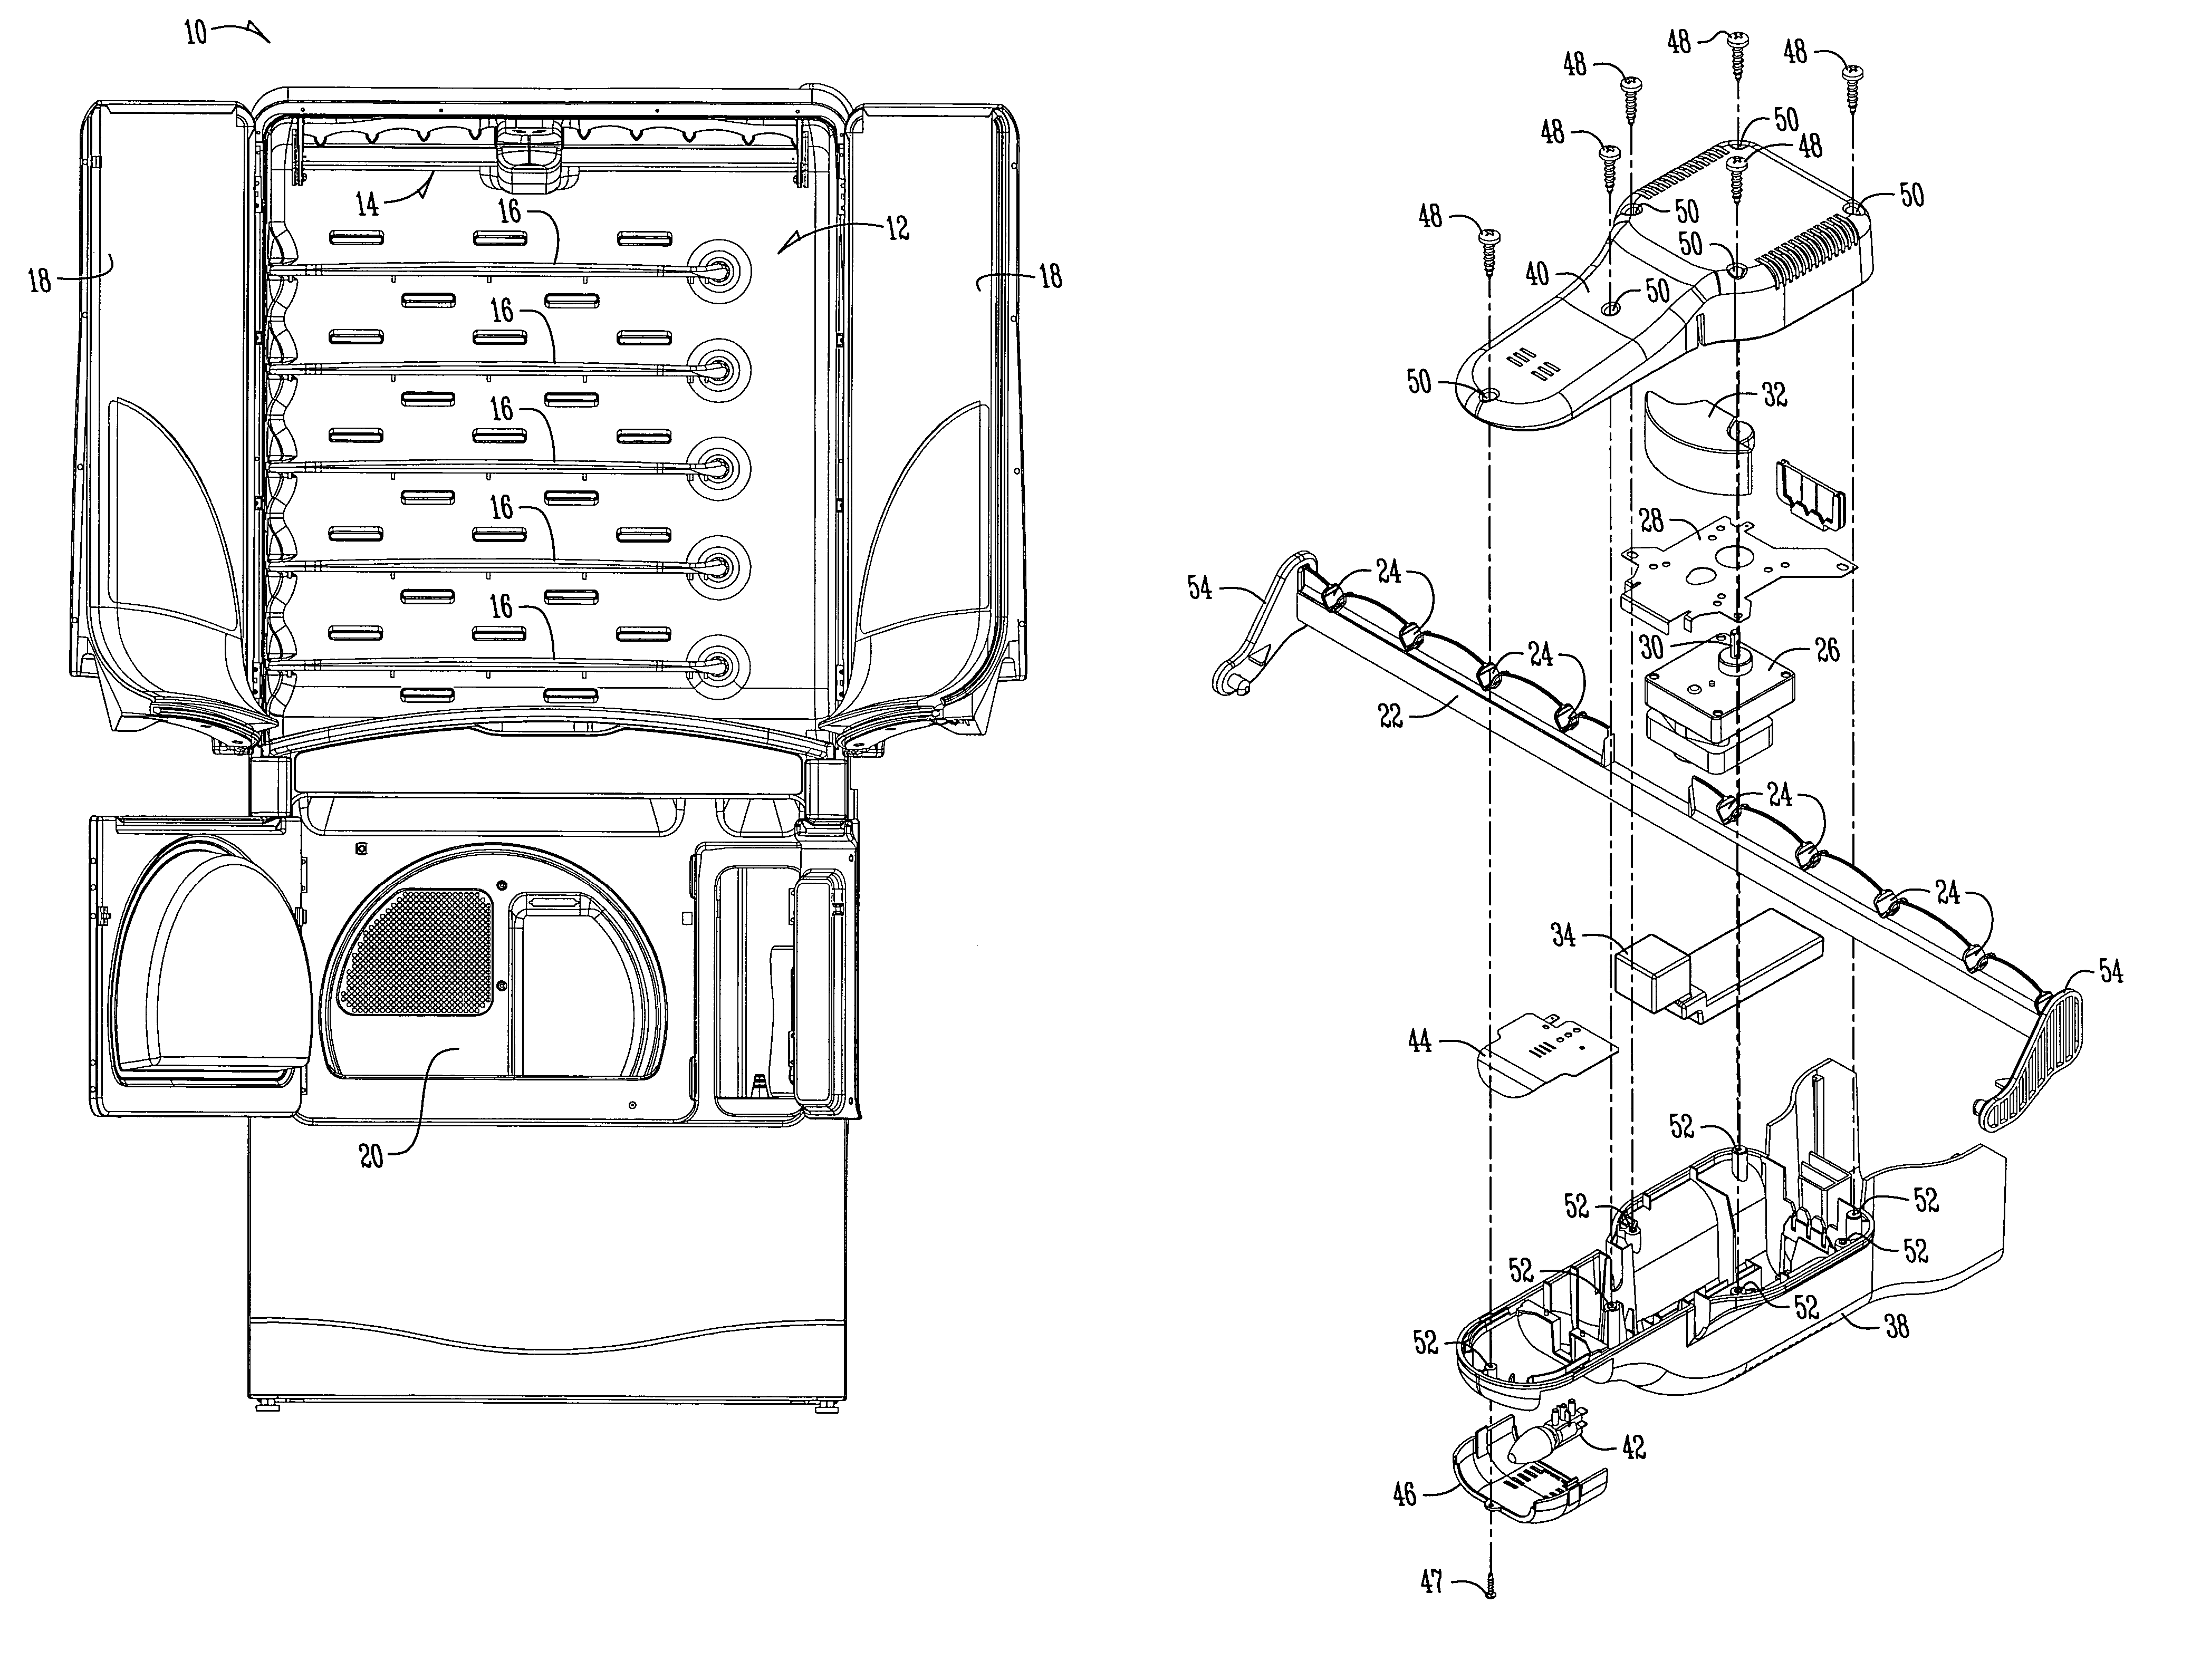 Drying cabinet shaker mechanism